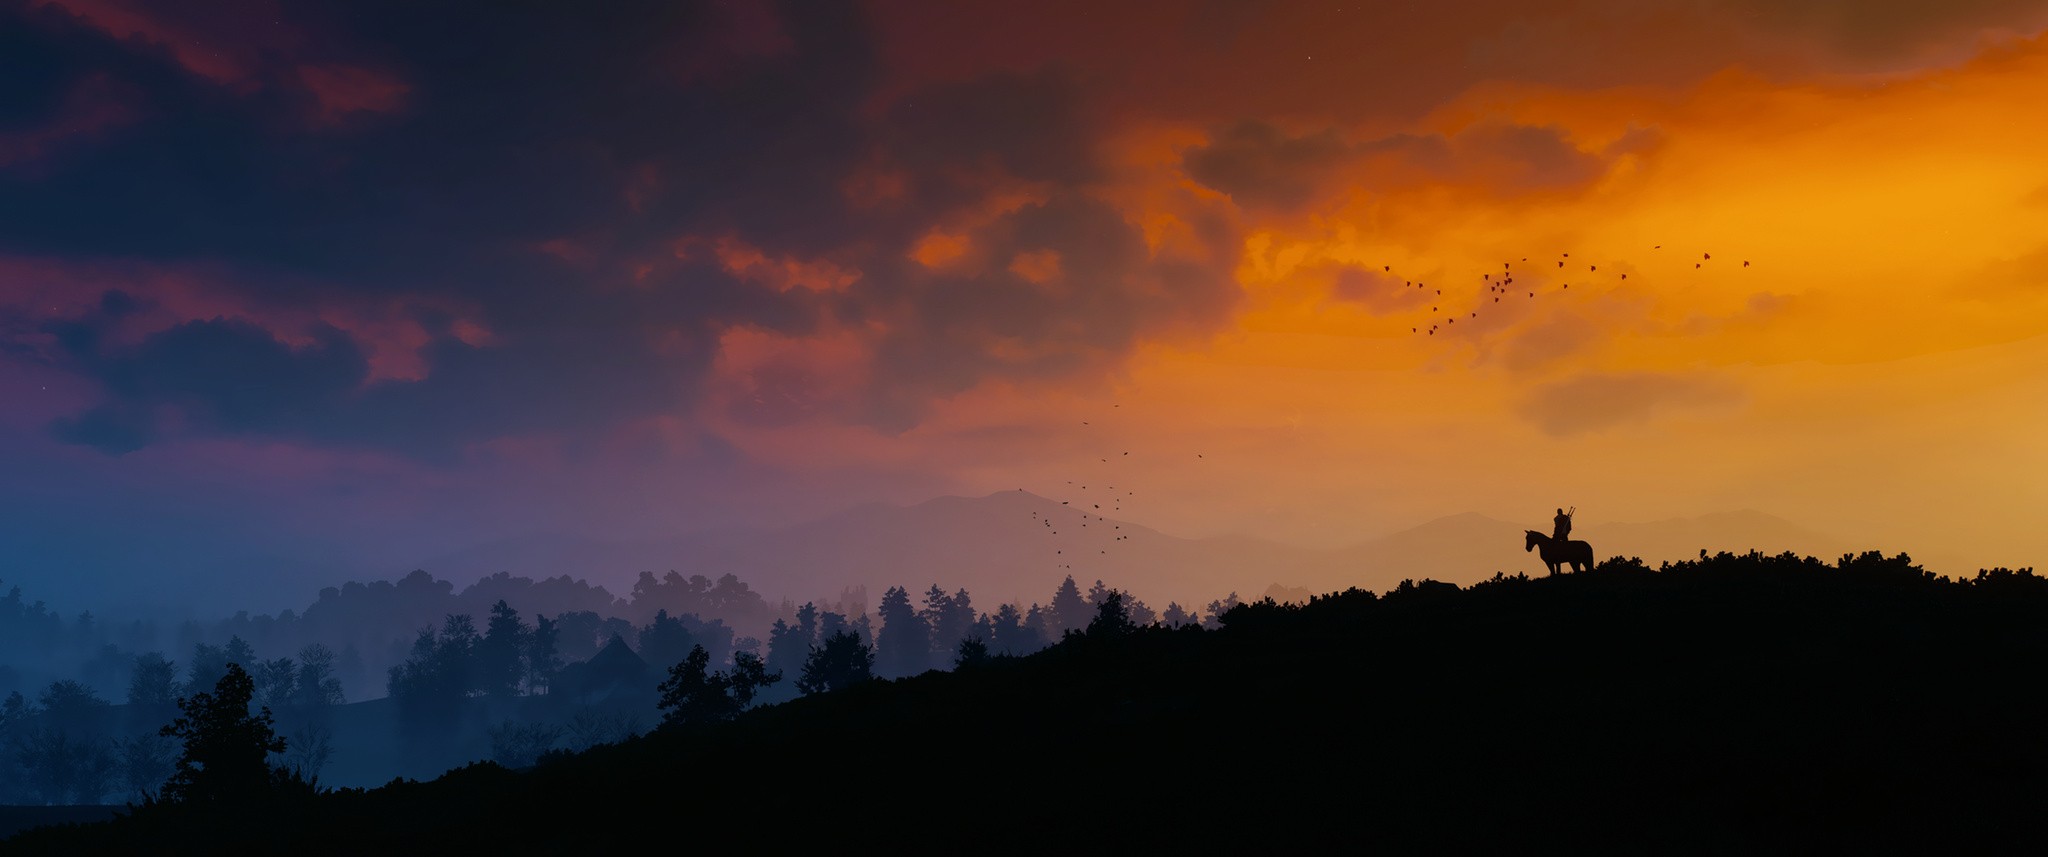 General 2048x857 The Witcher 3: Wild Hunt landscape sunset